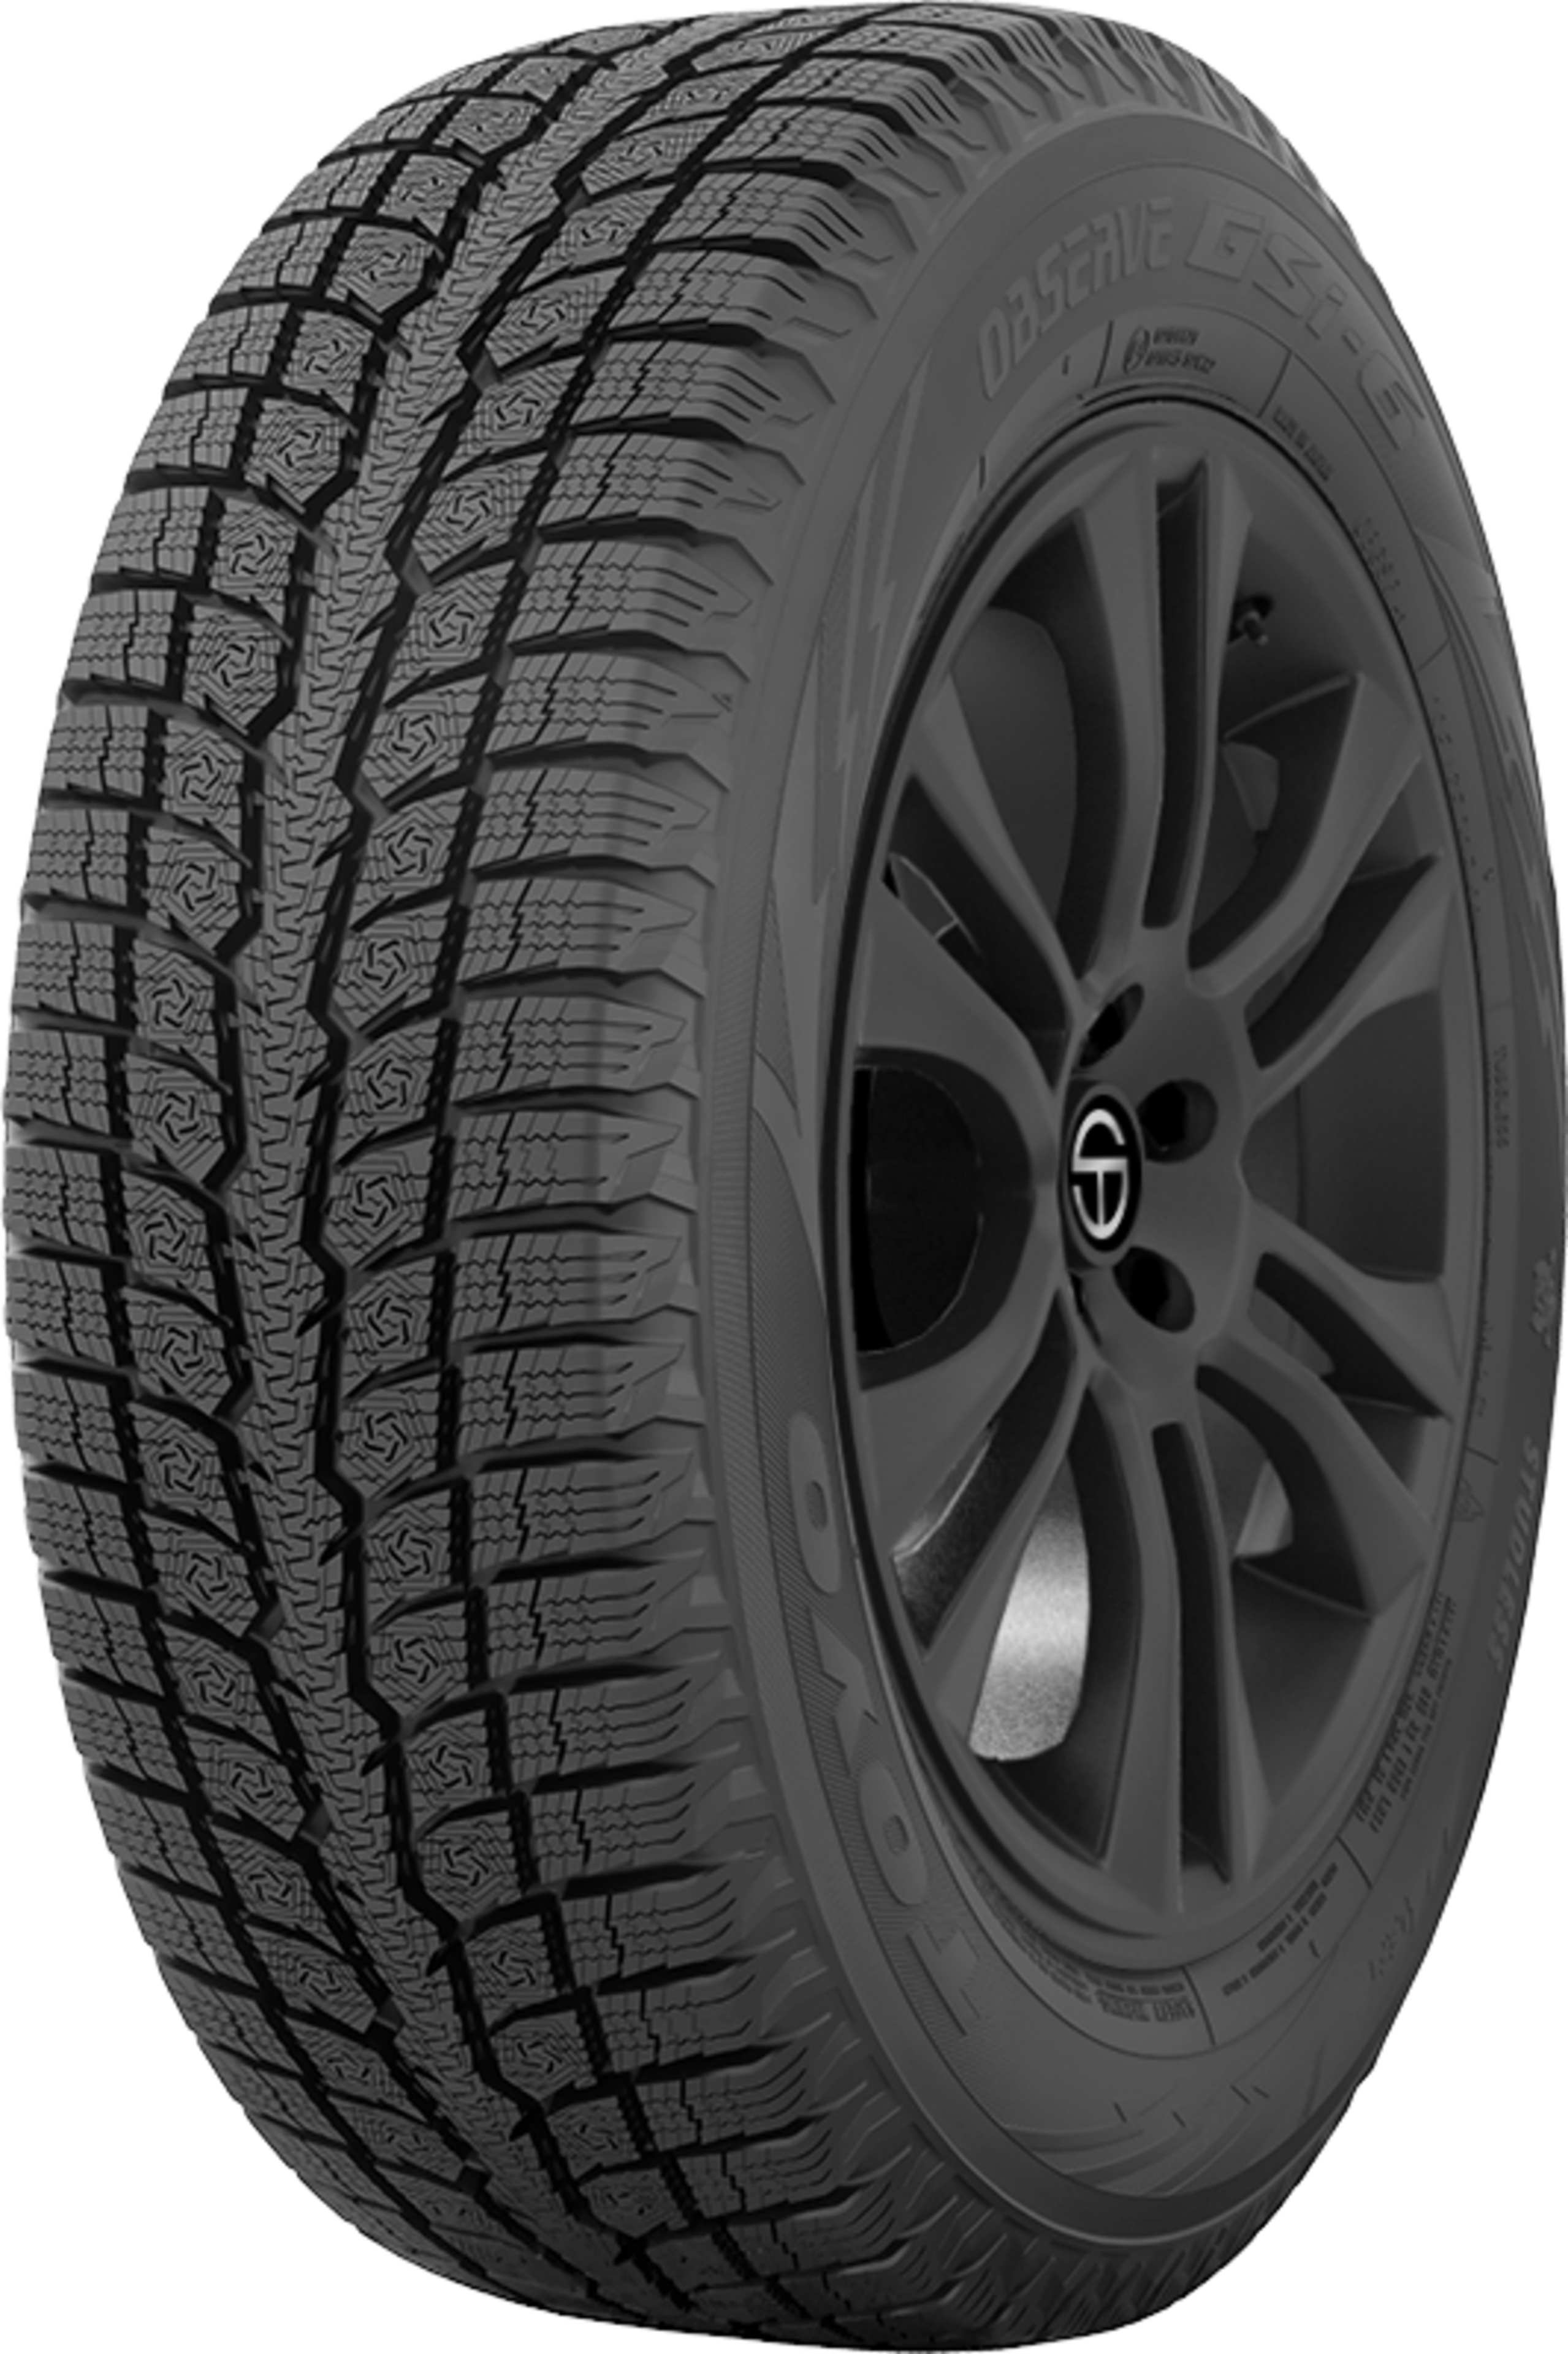 Buy Toyo Observe GSI-6 Tires Online | SimpleTire